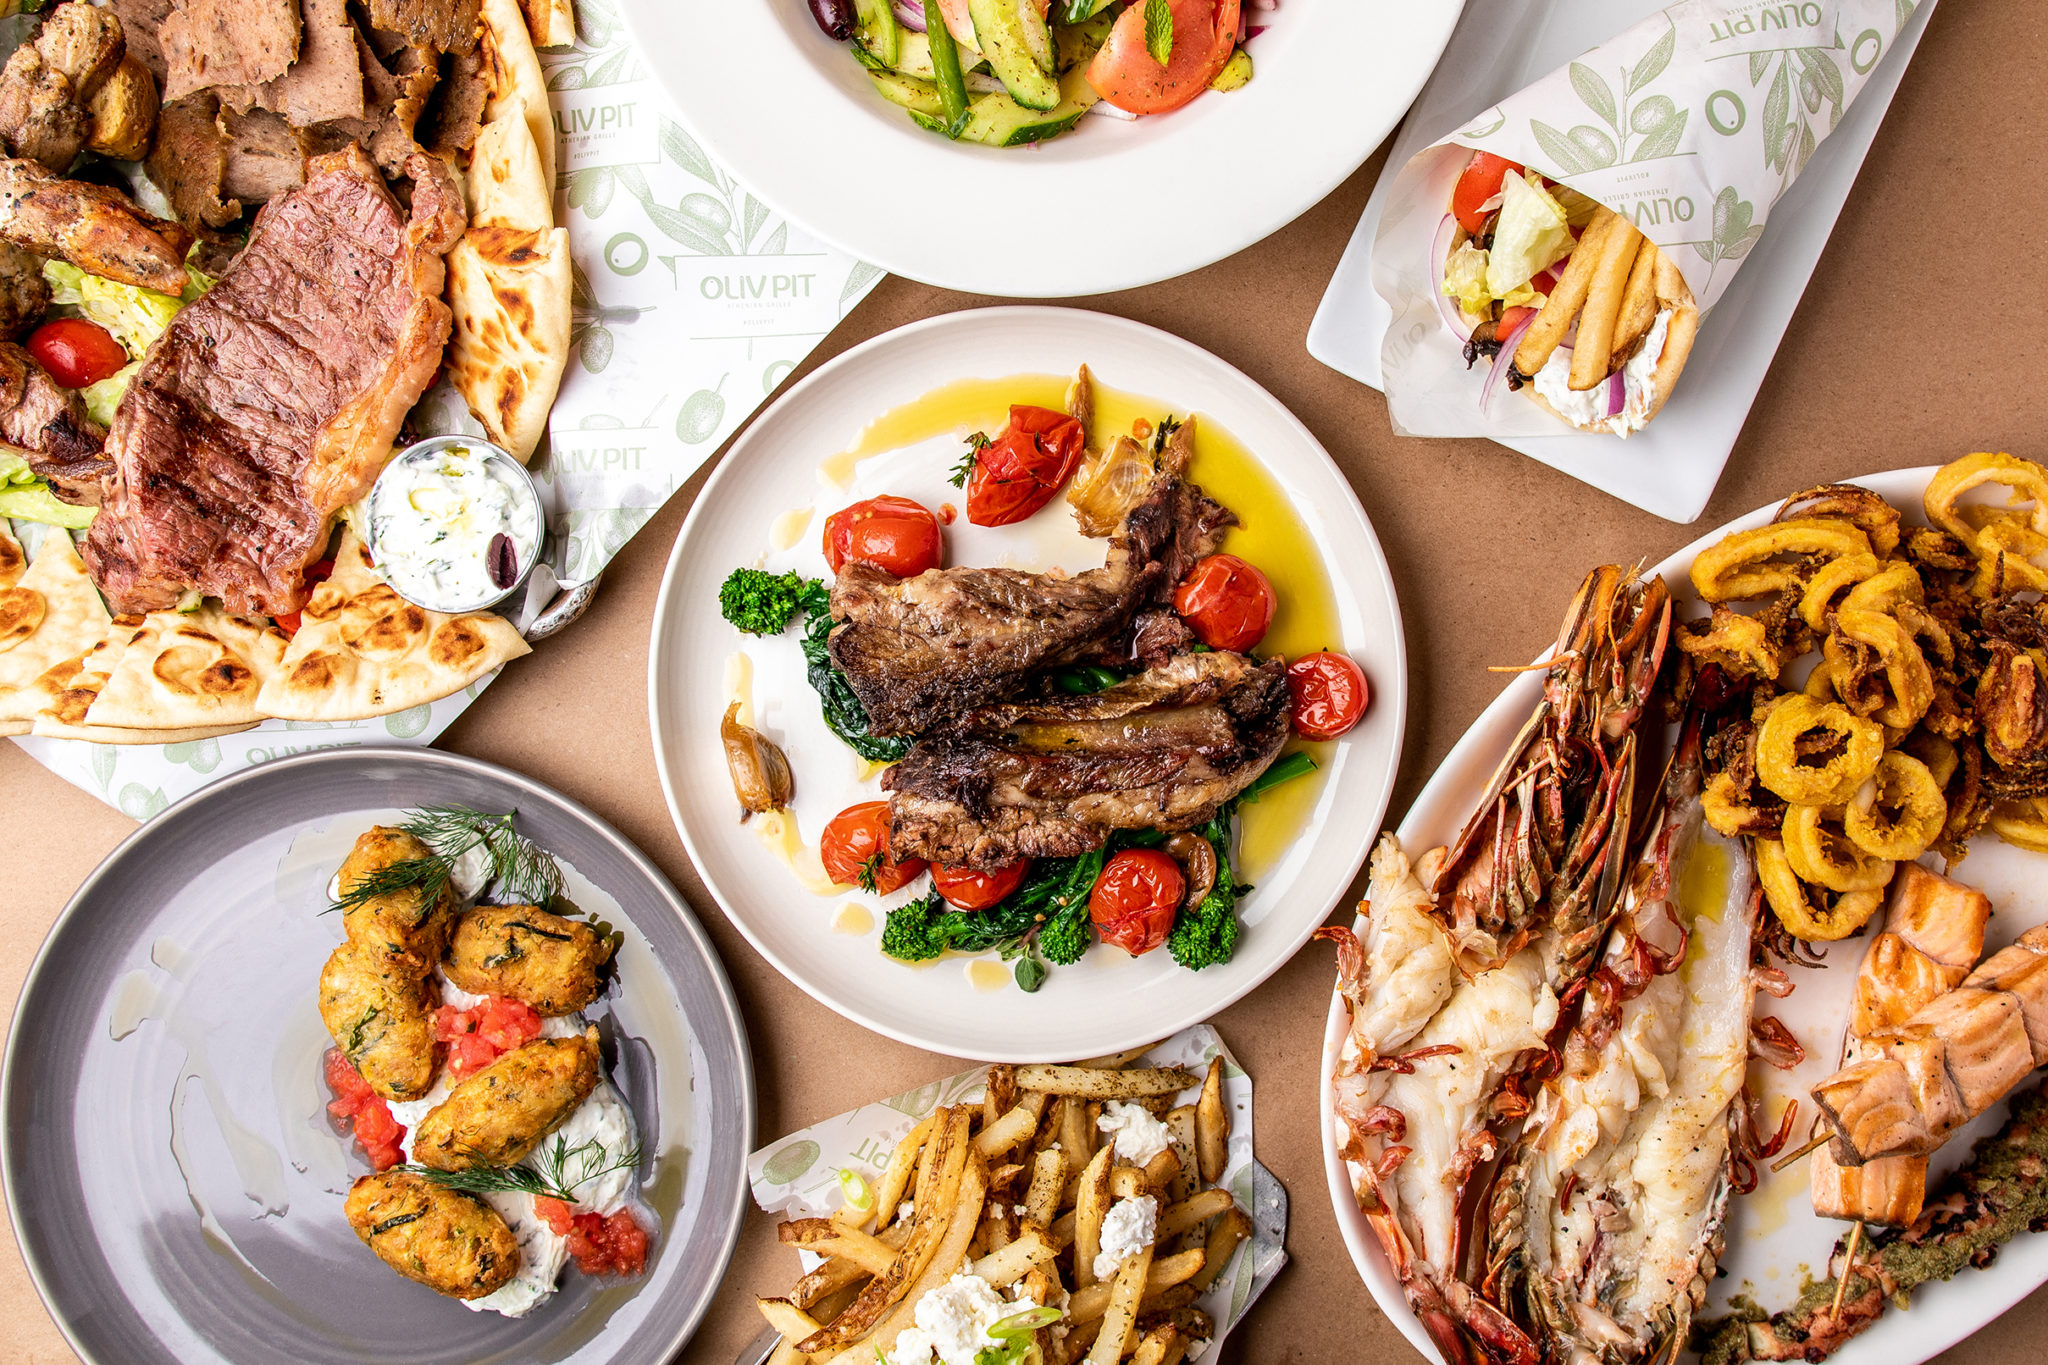 Oliv Pit Athenian food Mediterranean Restaurant